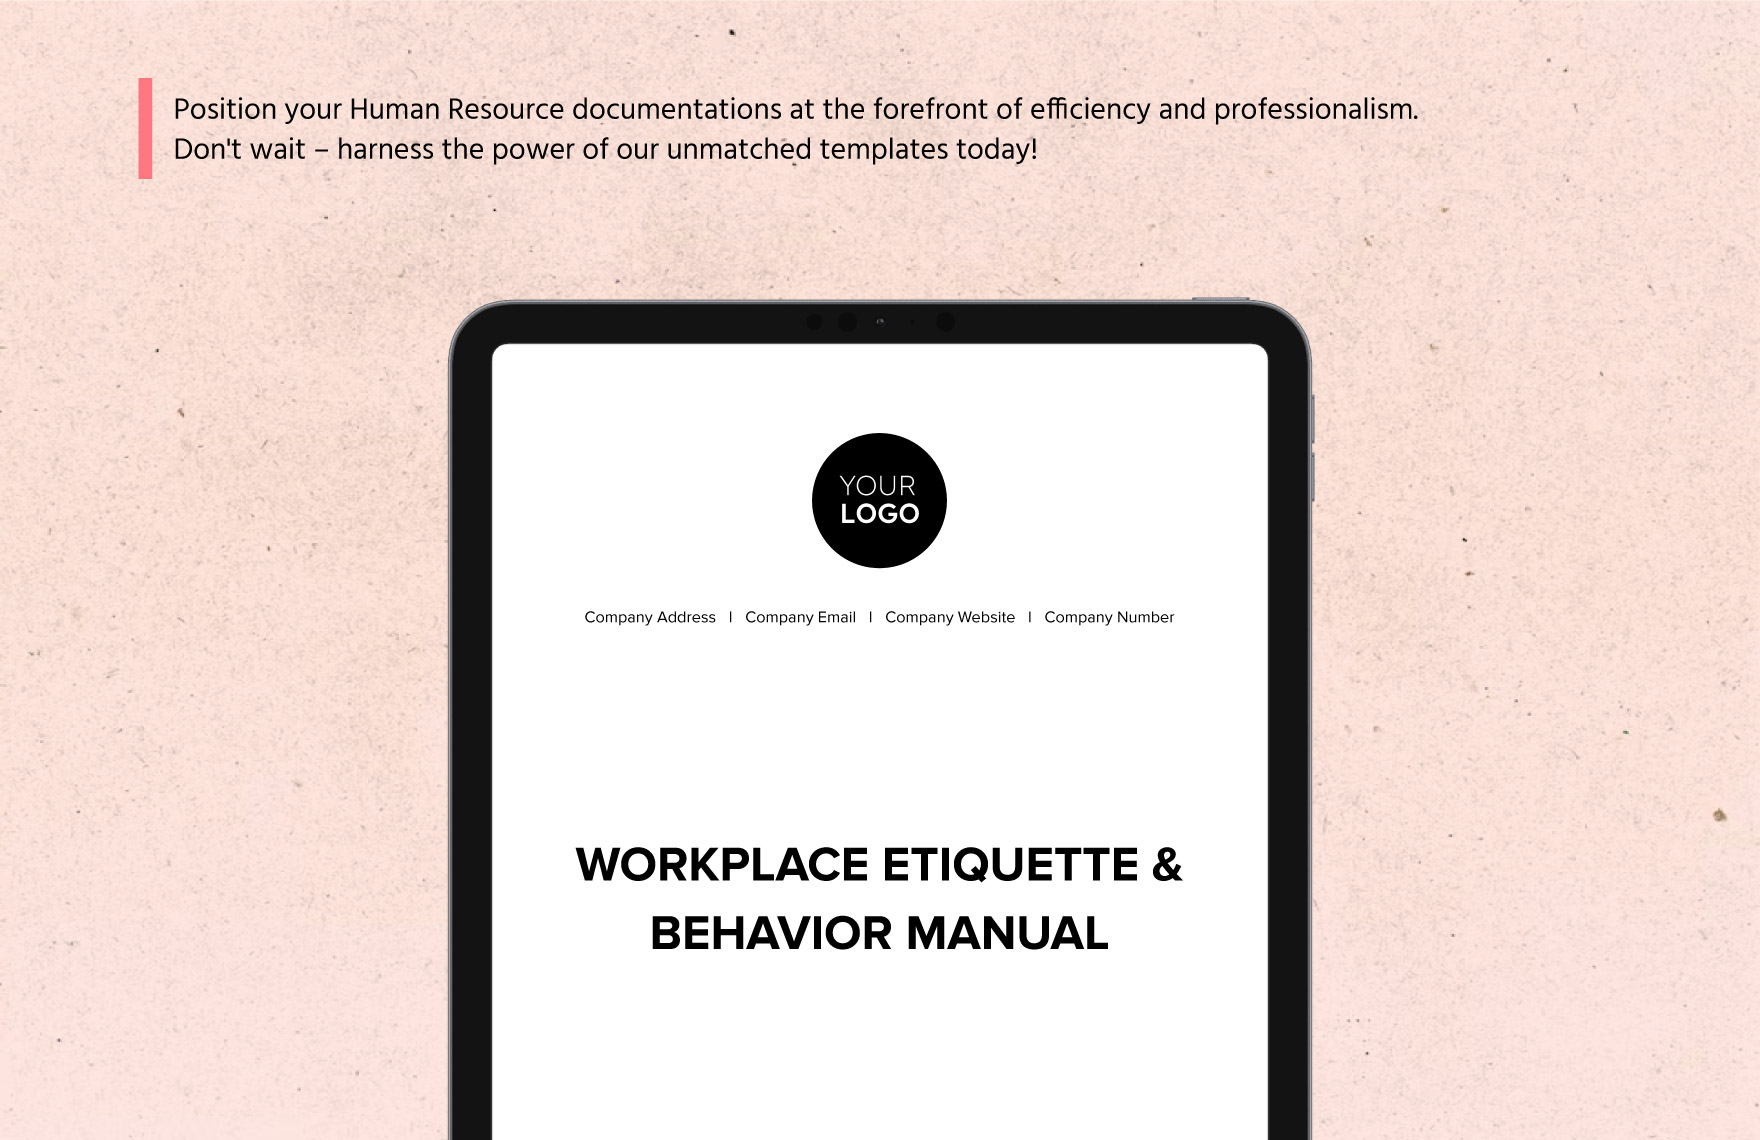 Workplace Etiquette & Behavior Manual HR Template